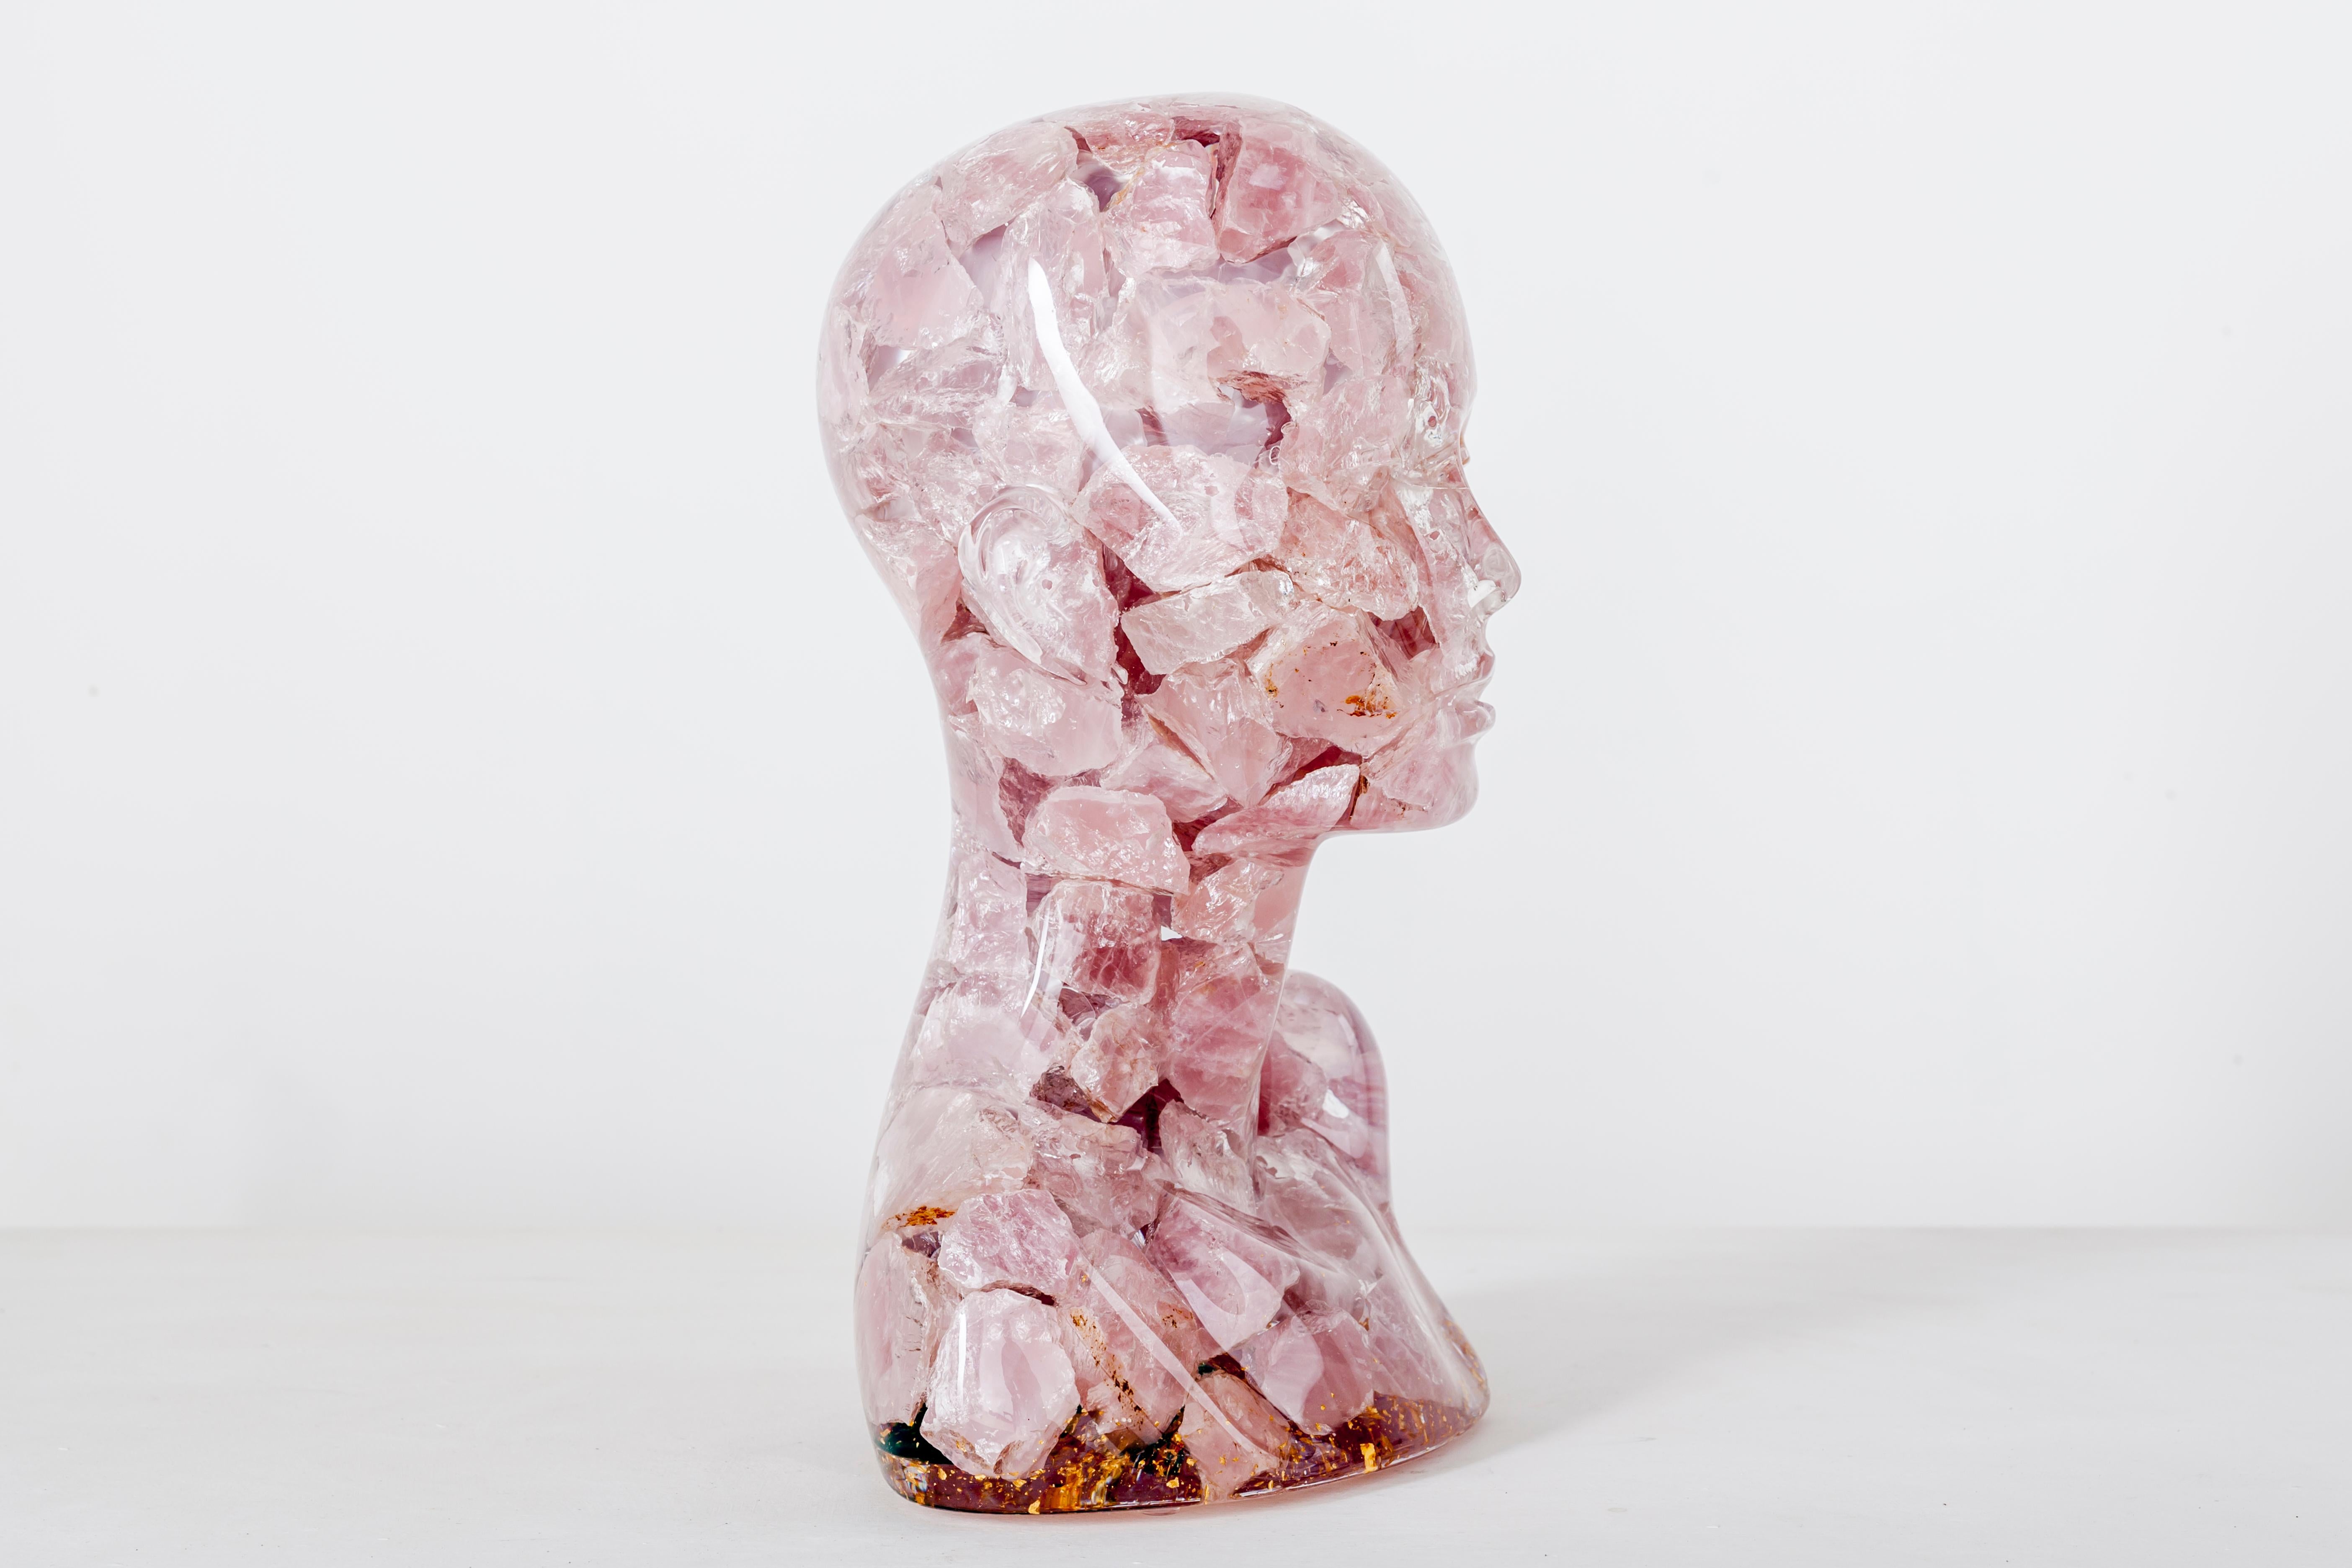 Aroha - « Femme en quartz rose » - Sculpture de Guido Oakley